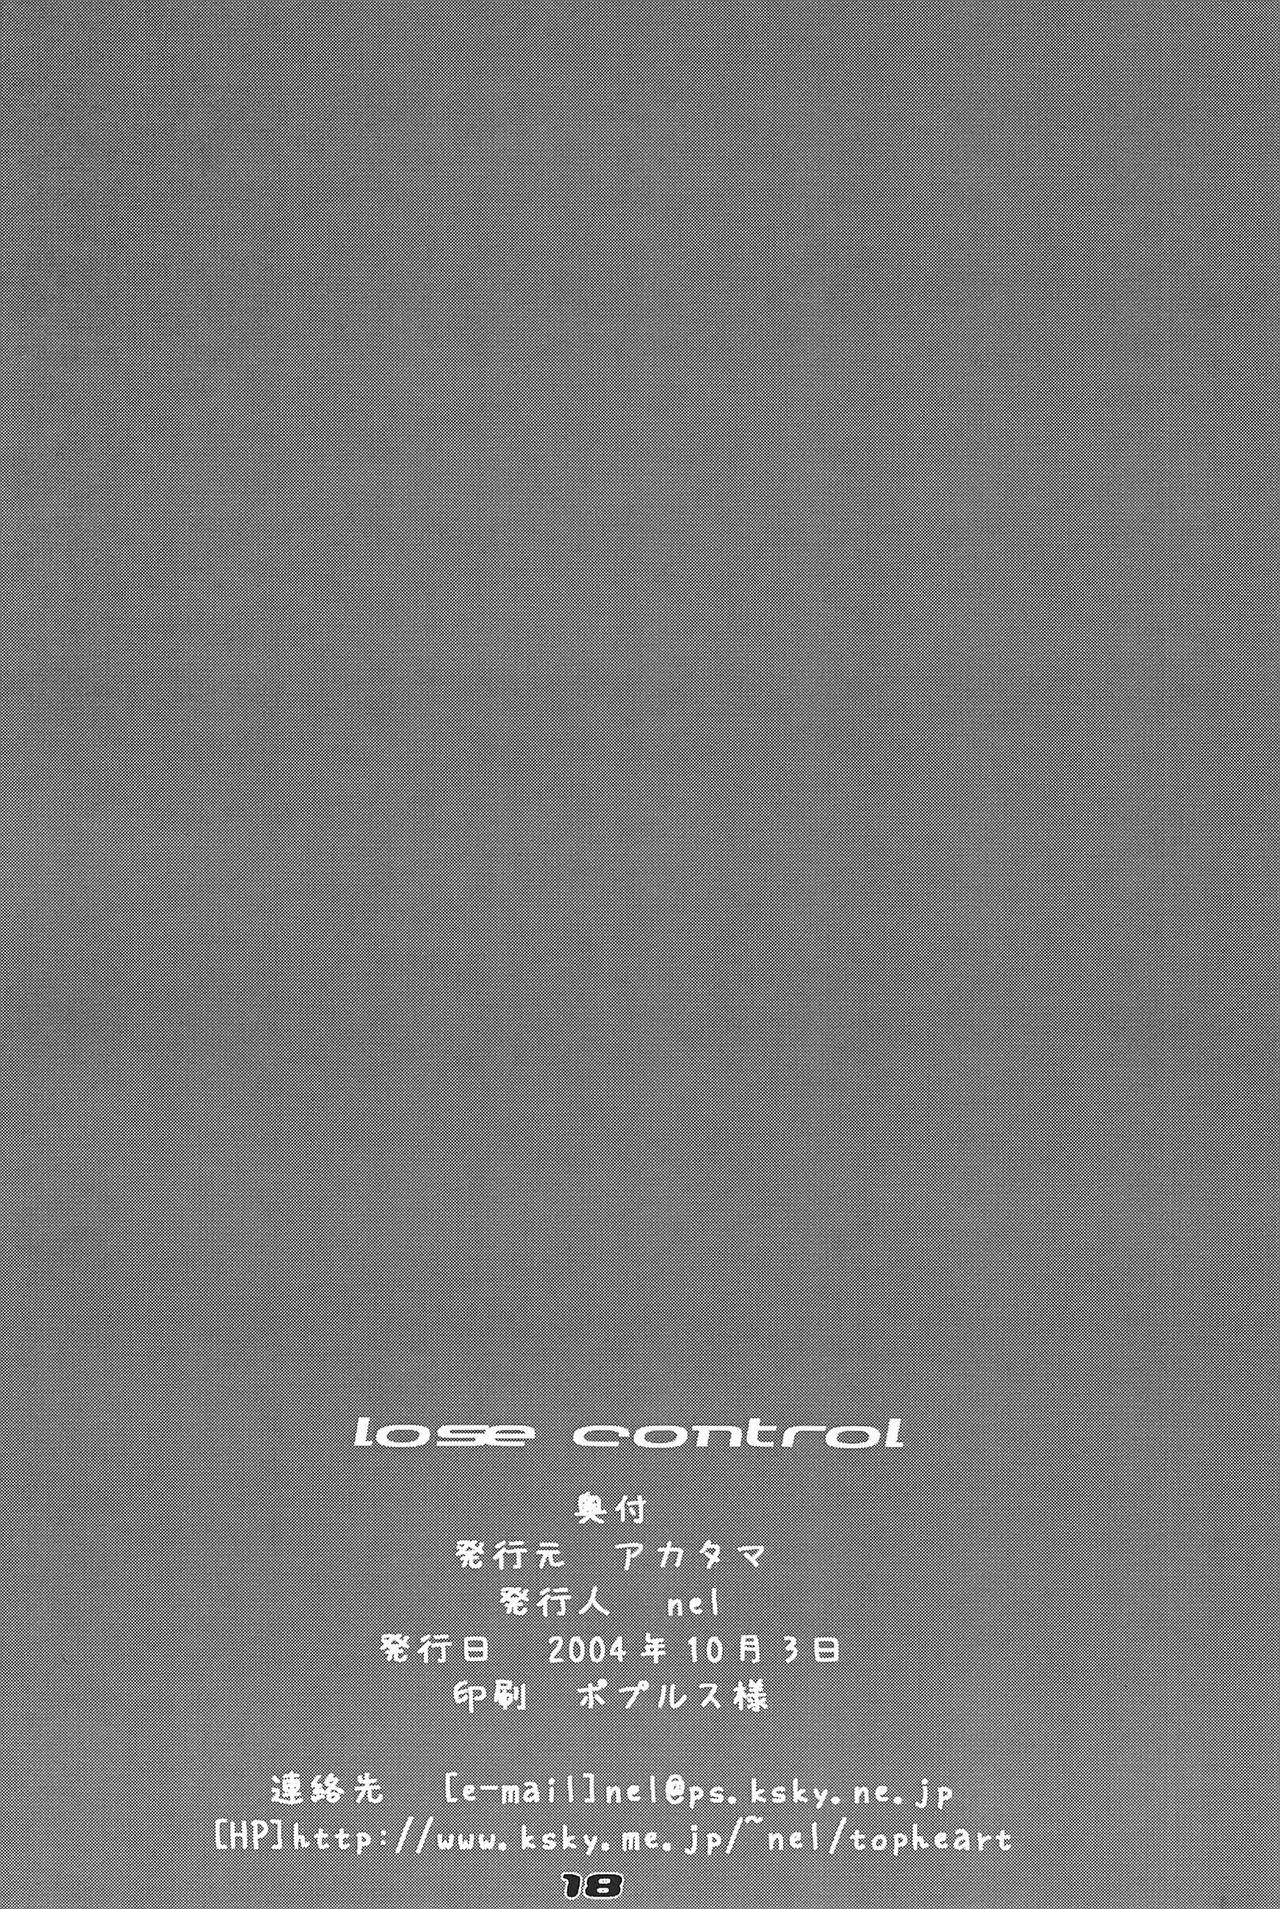 lose control 17